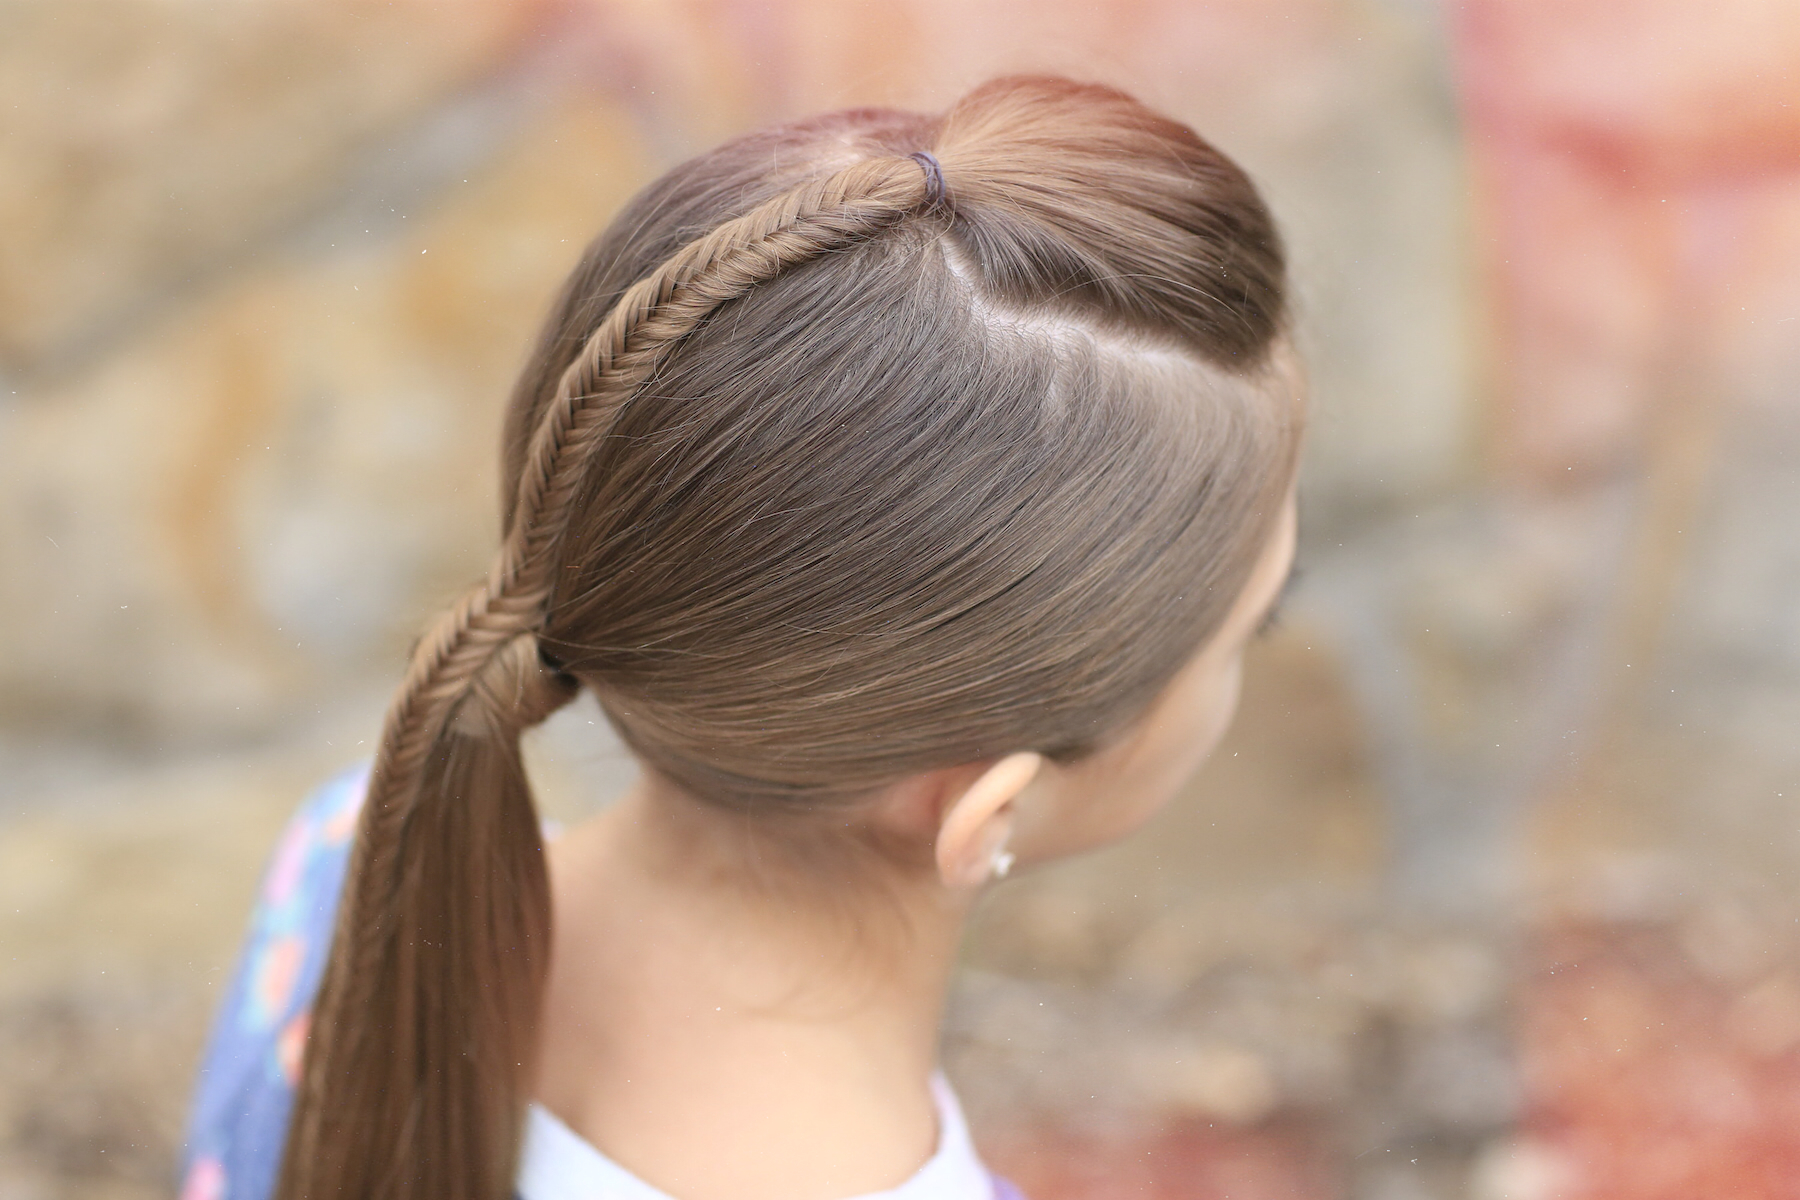 12 ways to wear ponytail braids, from tied-back twists to hybrid fishtails